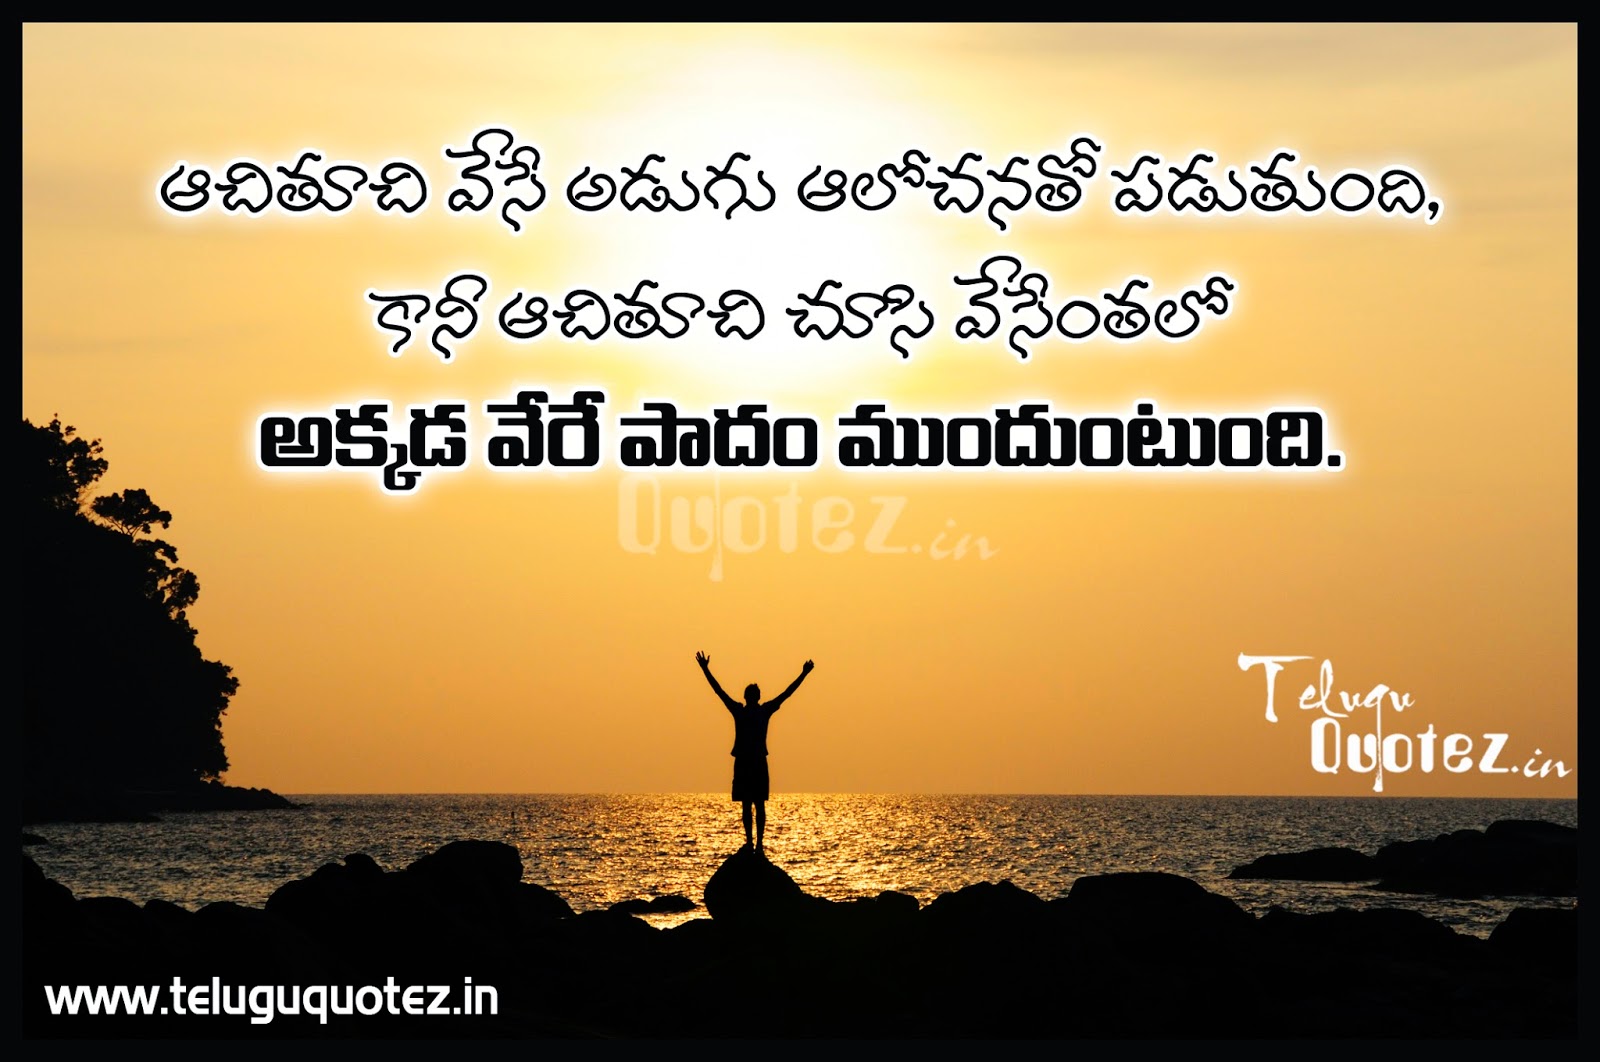 Telugu Quotes on life | naveengfx